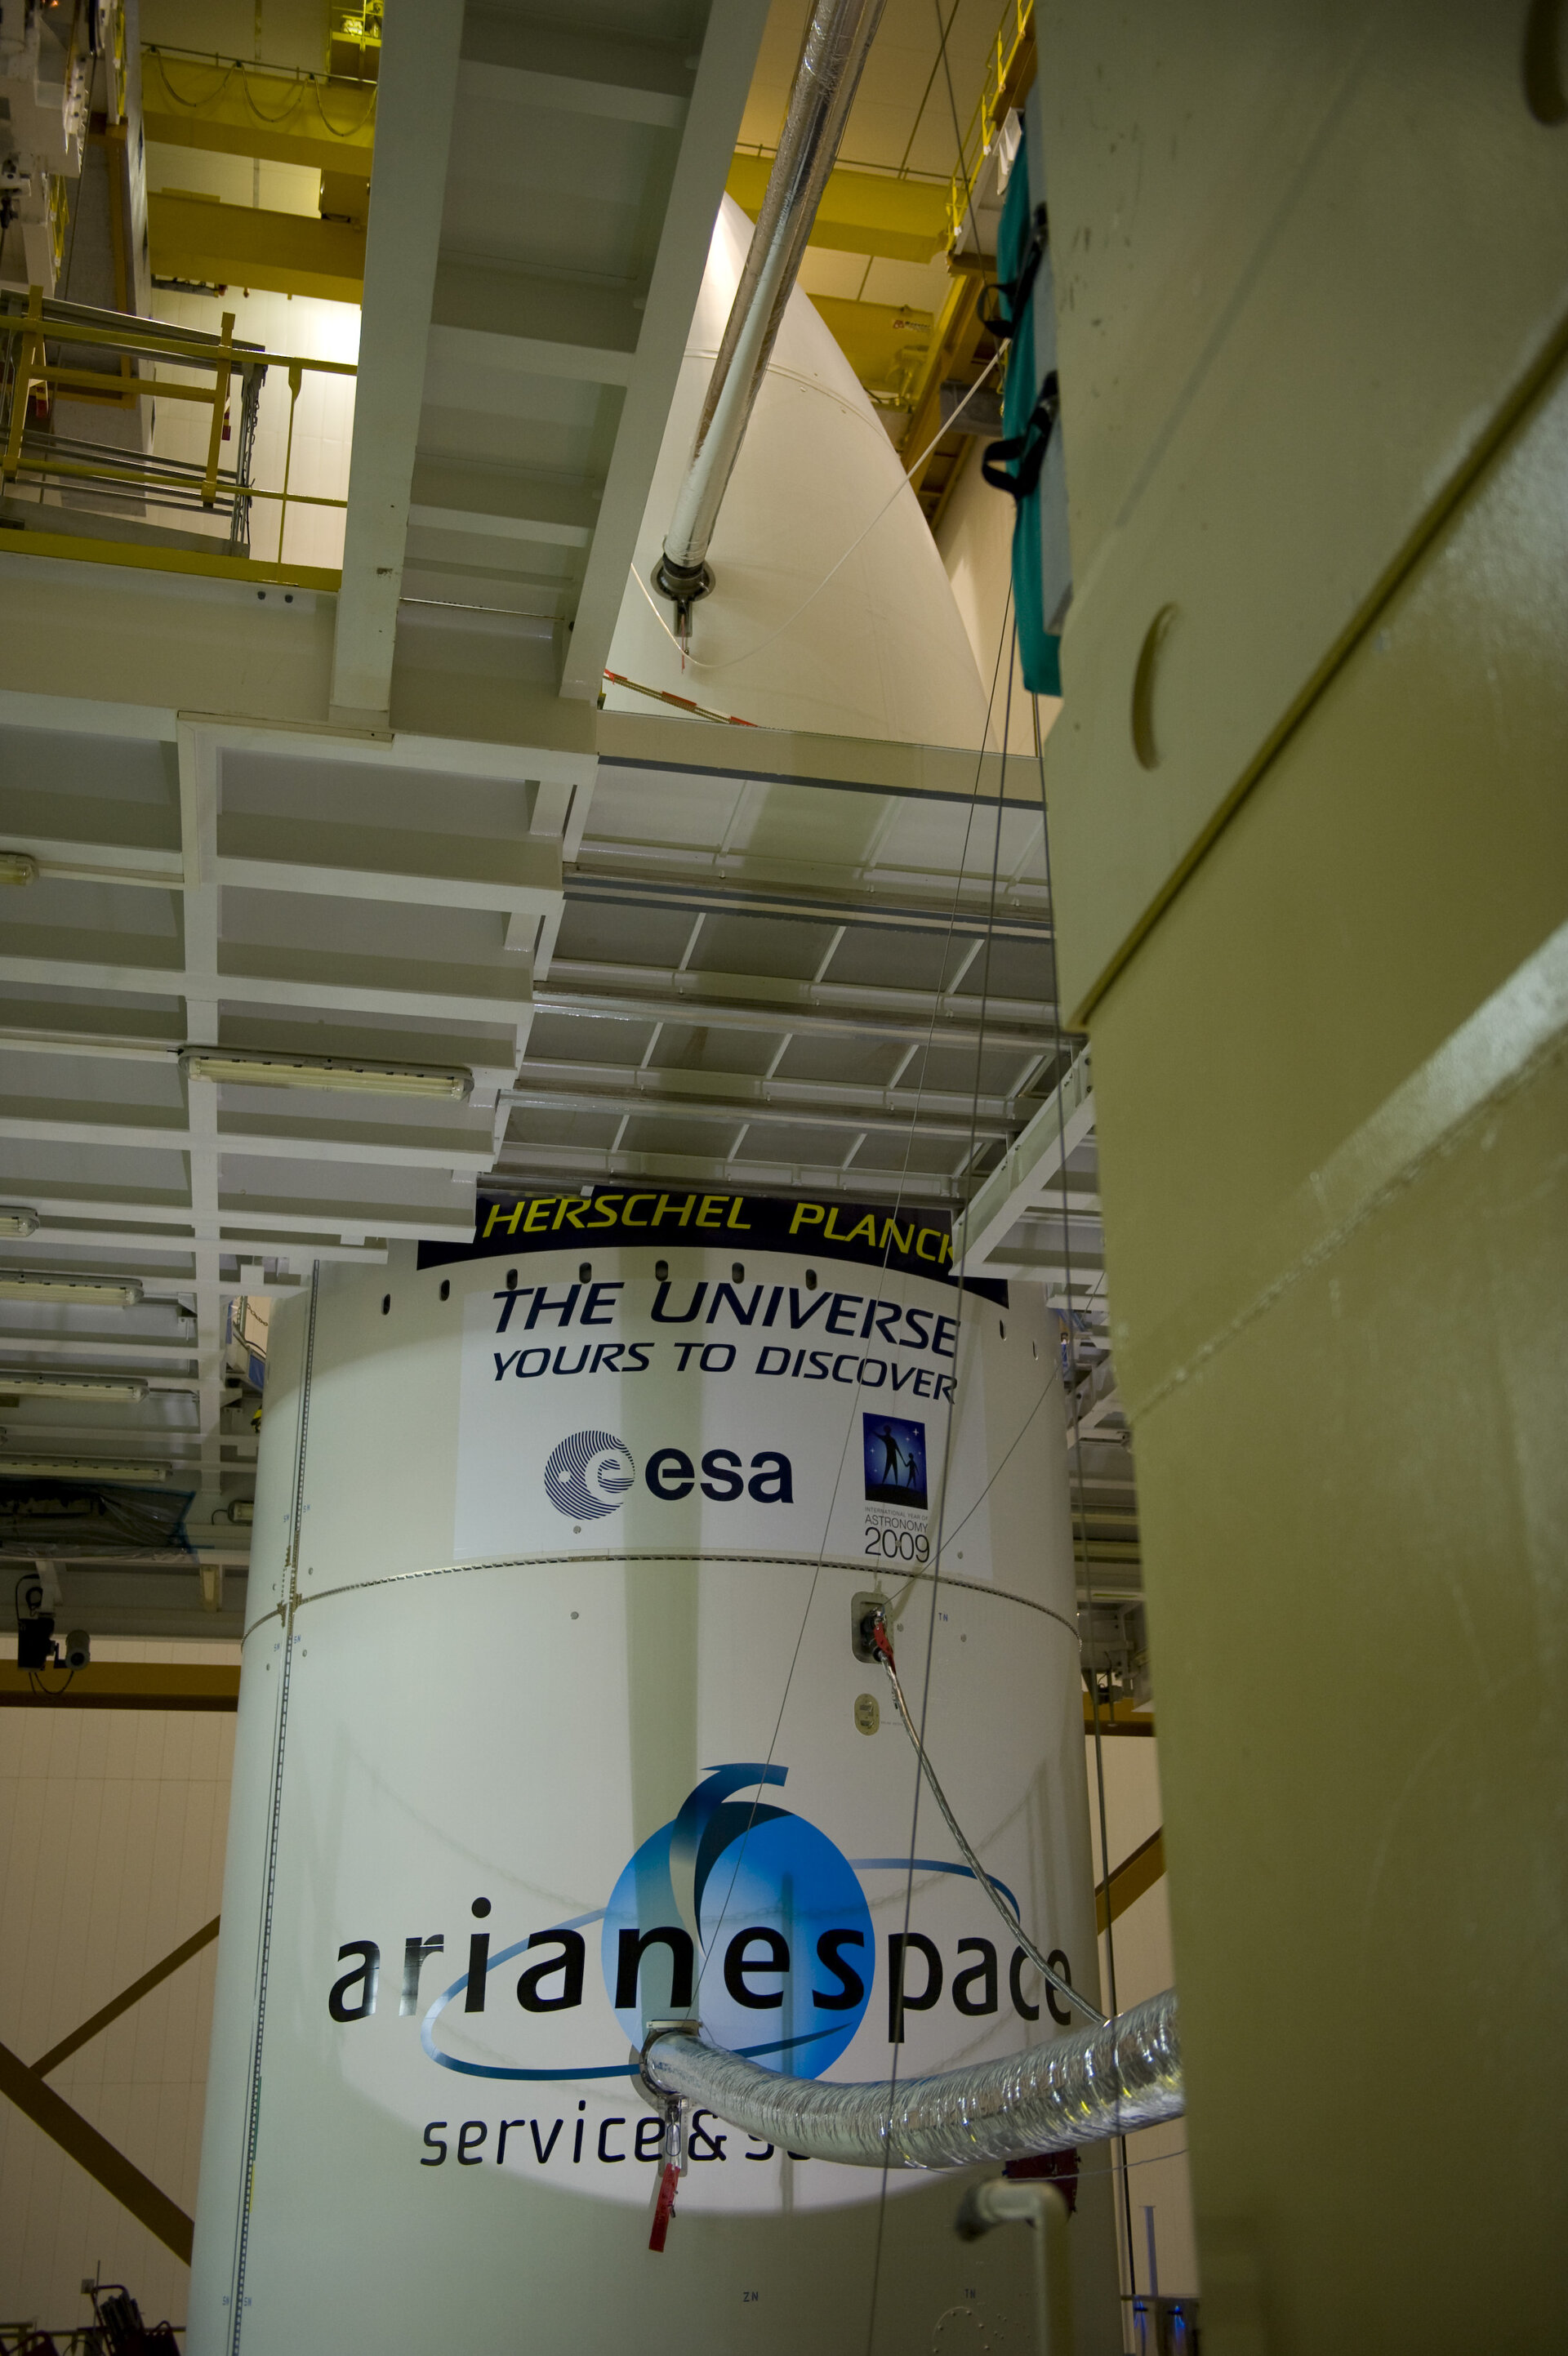 Ariane 5 carrying Herschel and Planck